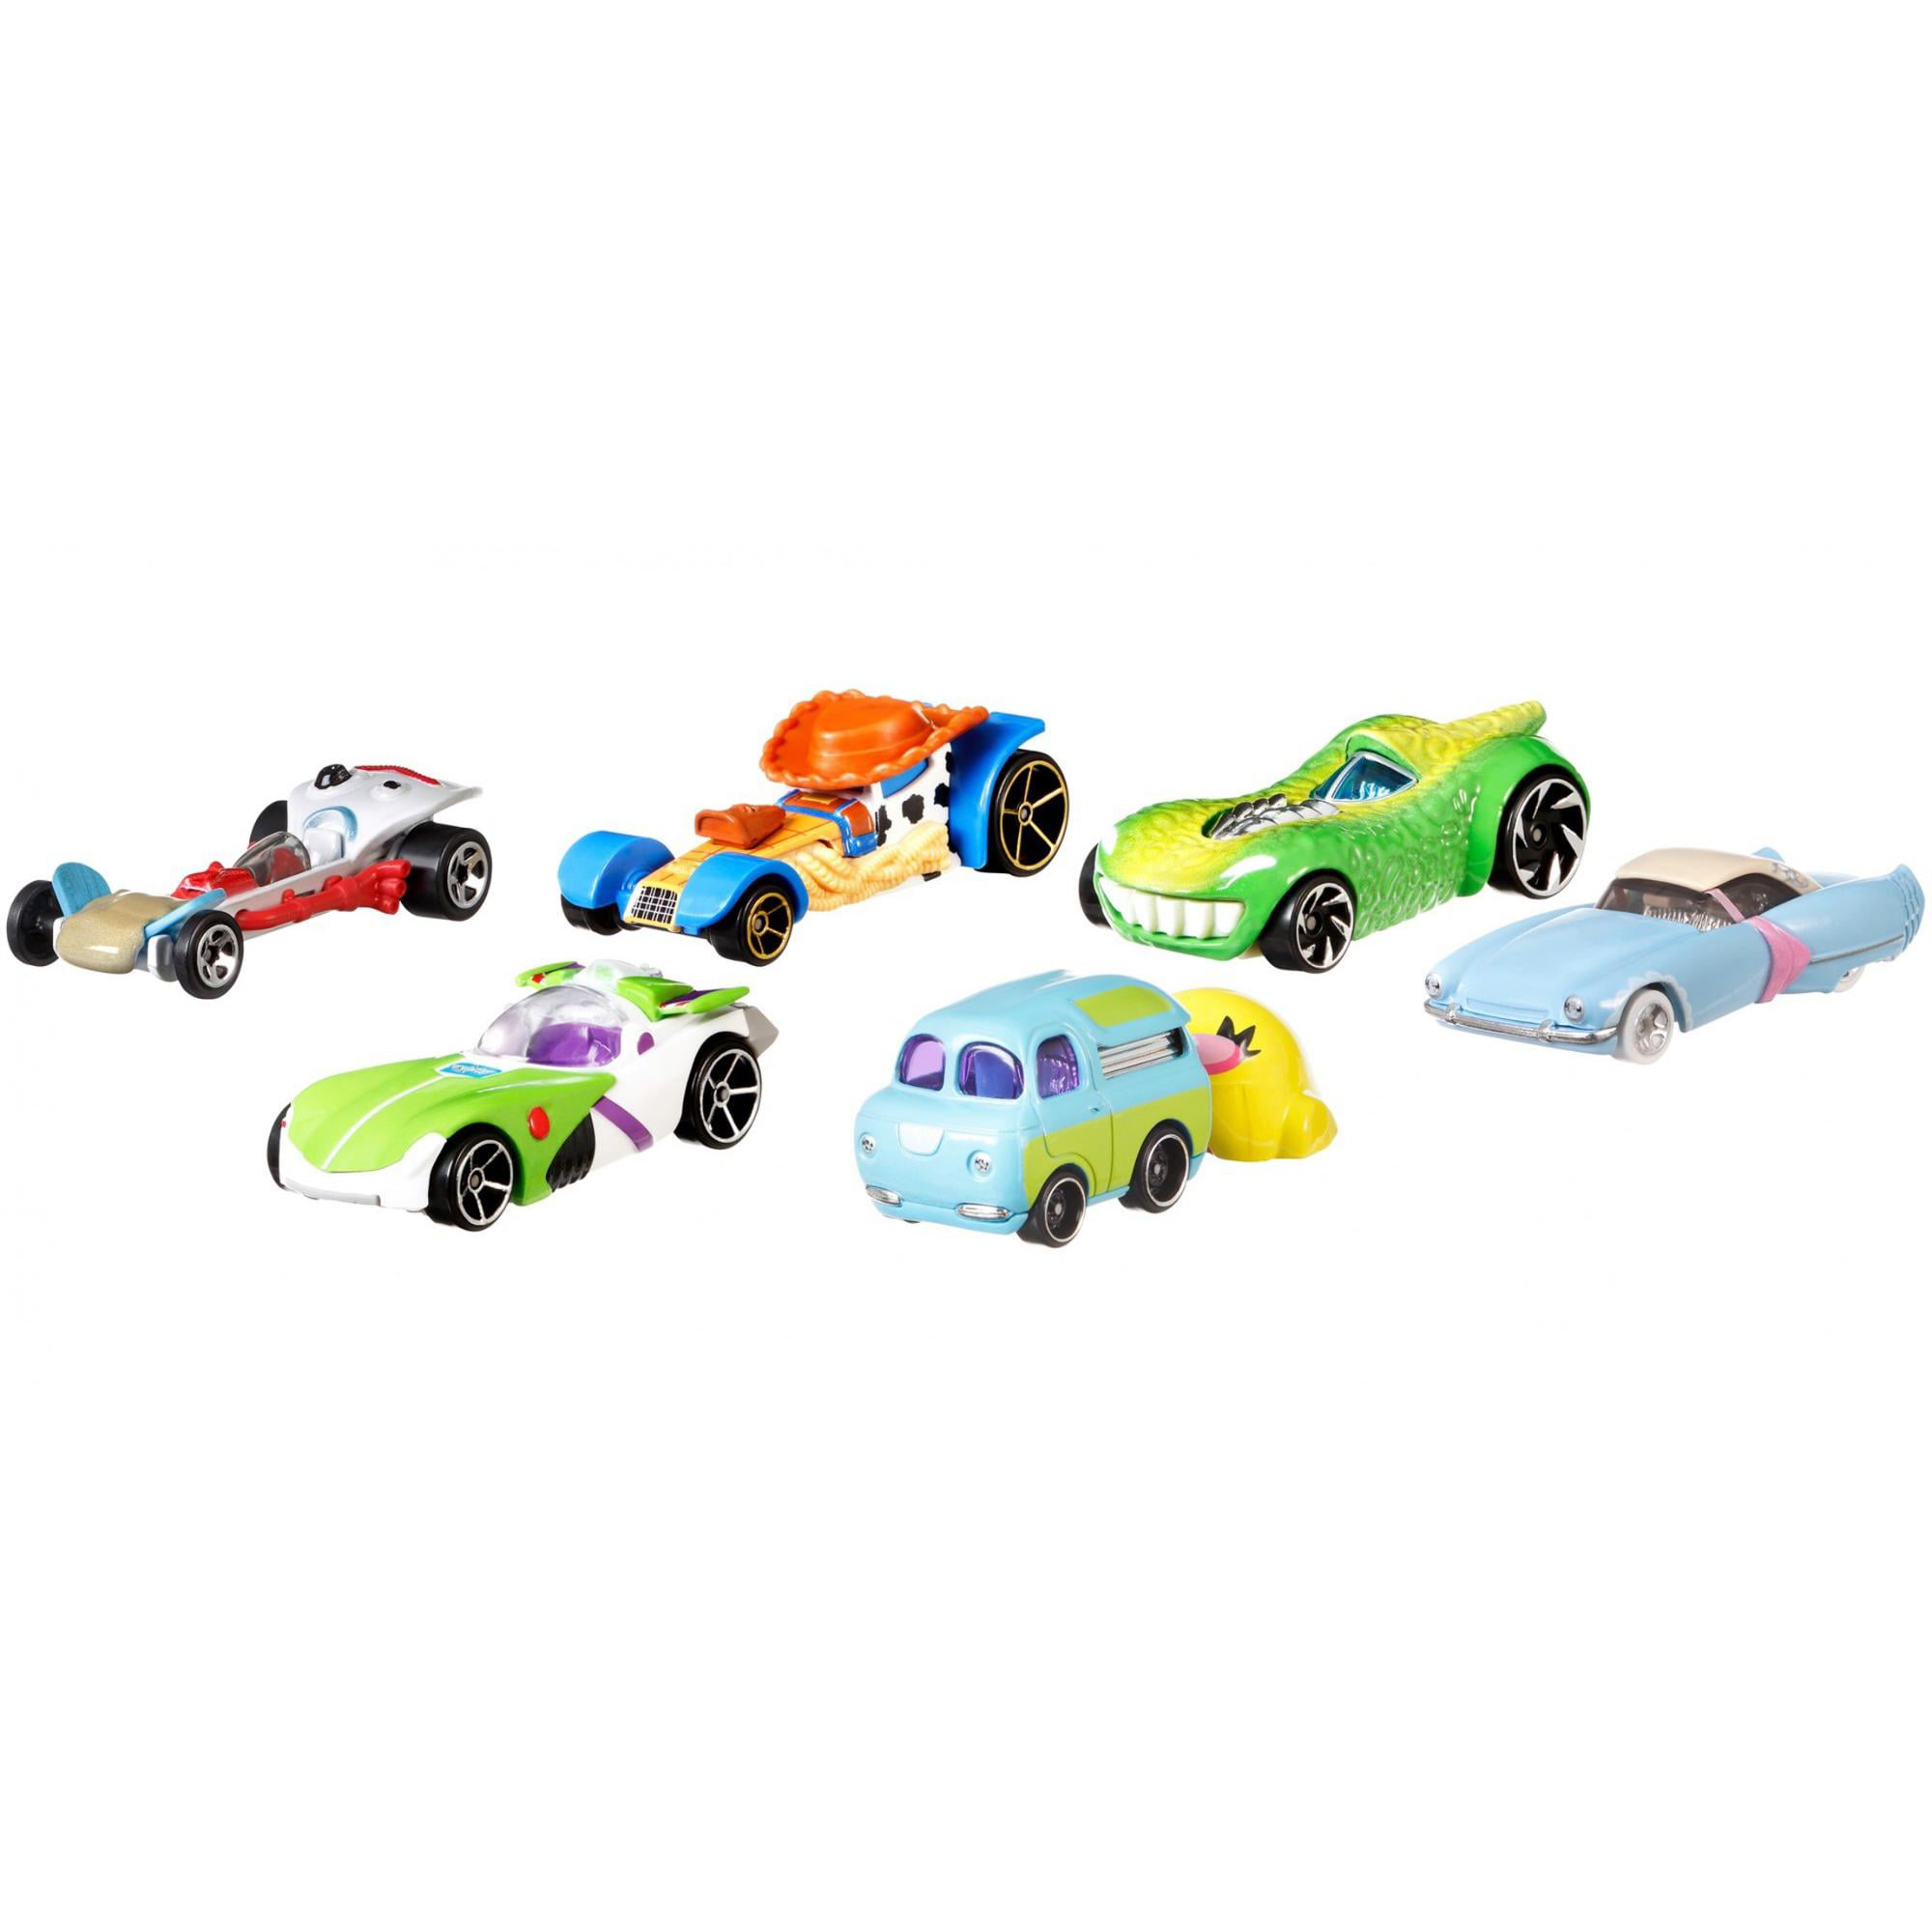 alle 8 Autos im Set ca.6 cm groß Mattel HotWheels Character Cars Toy Story 4 